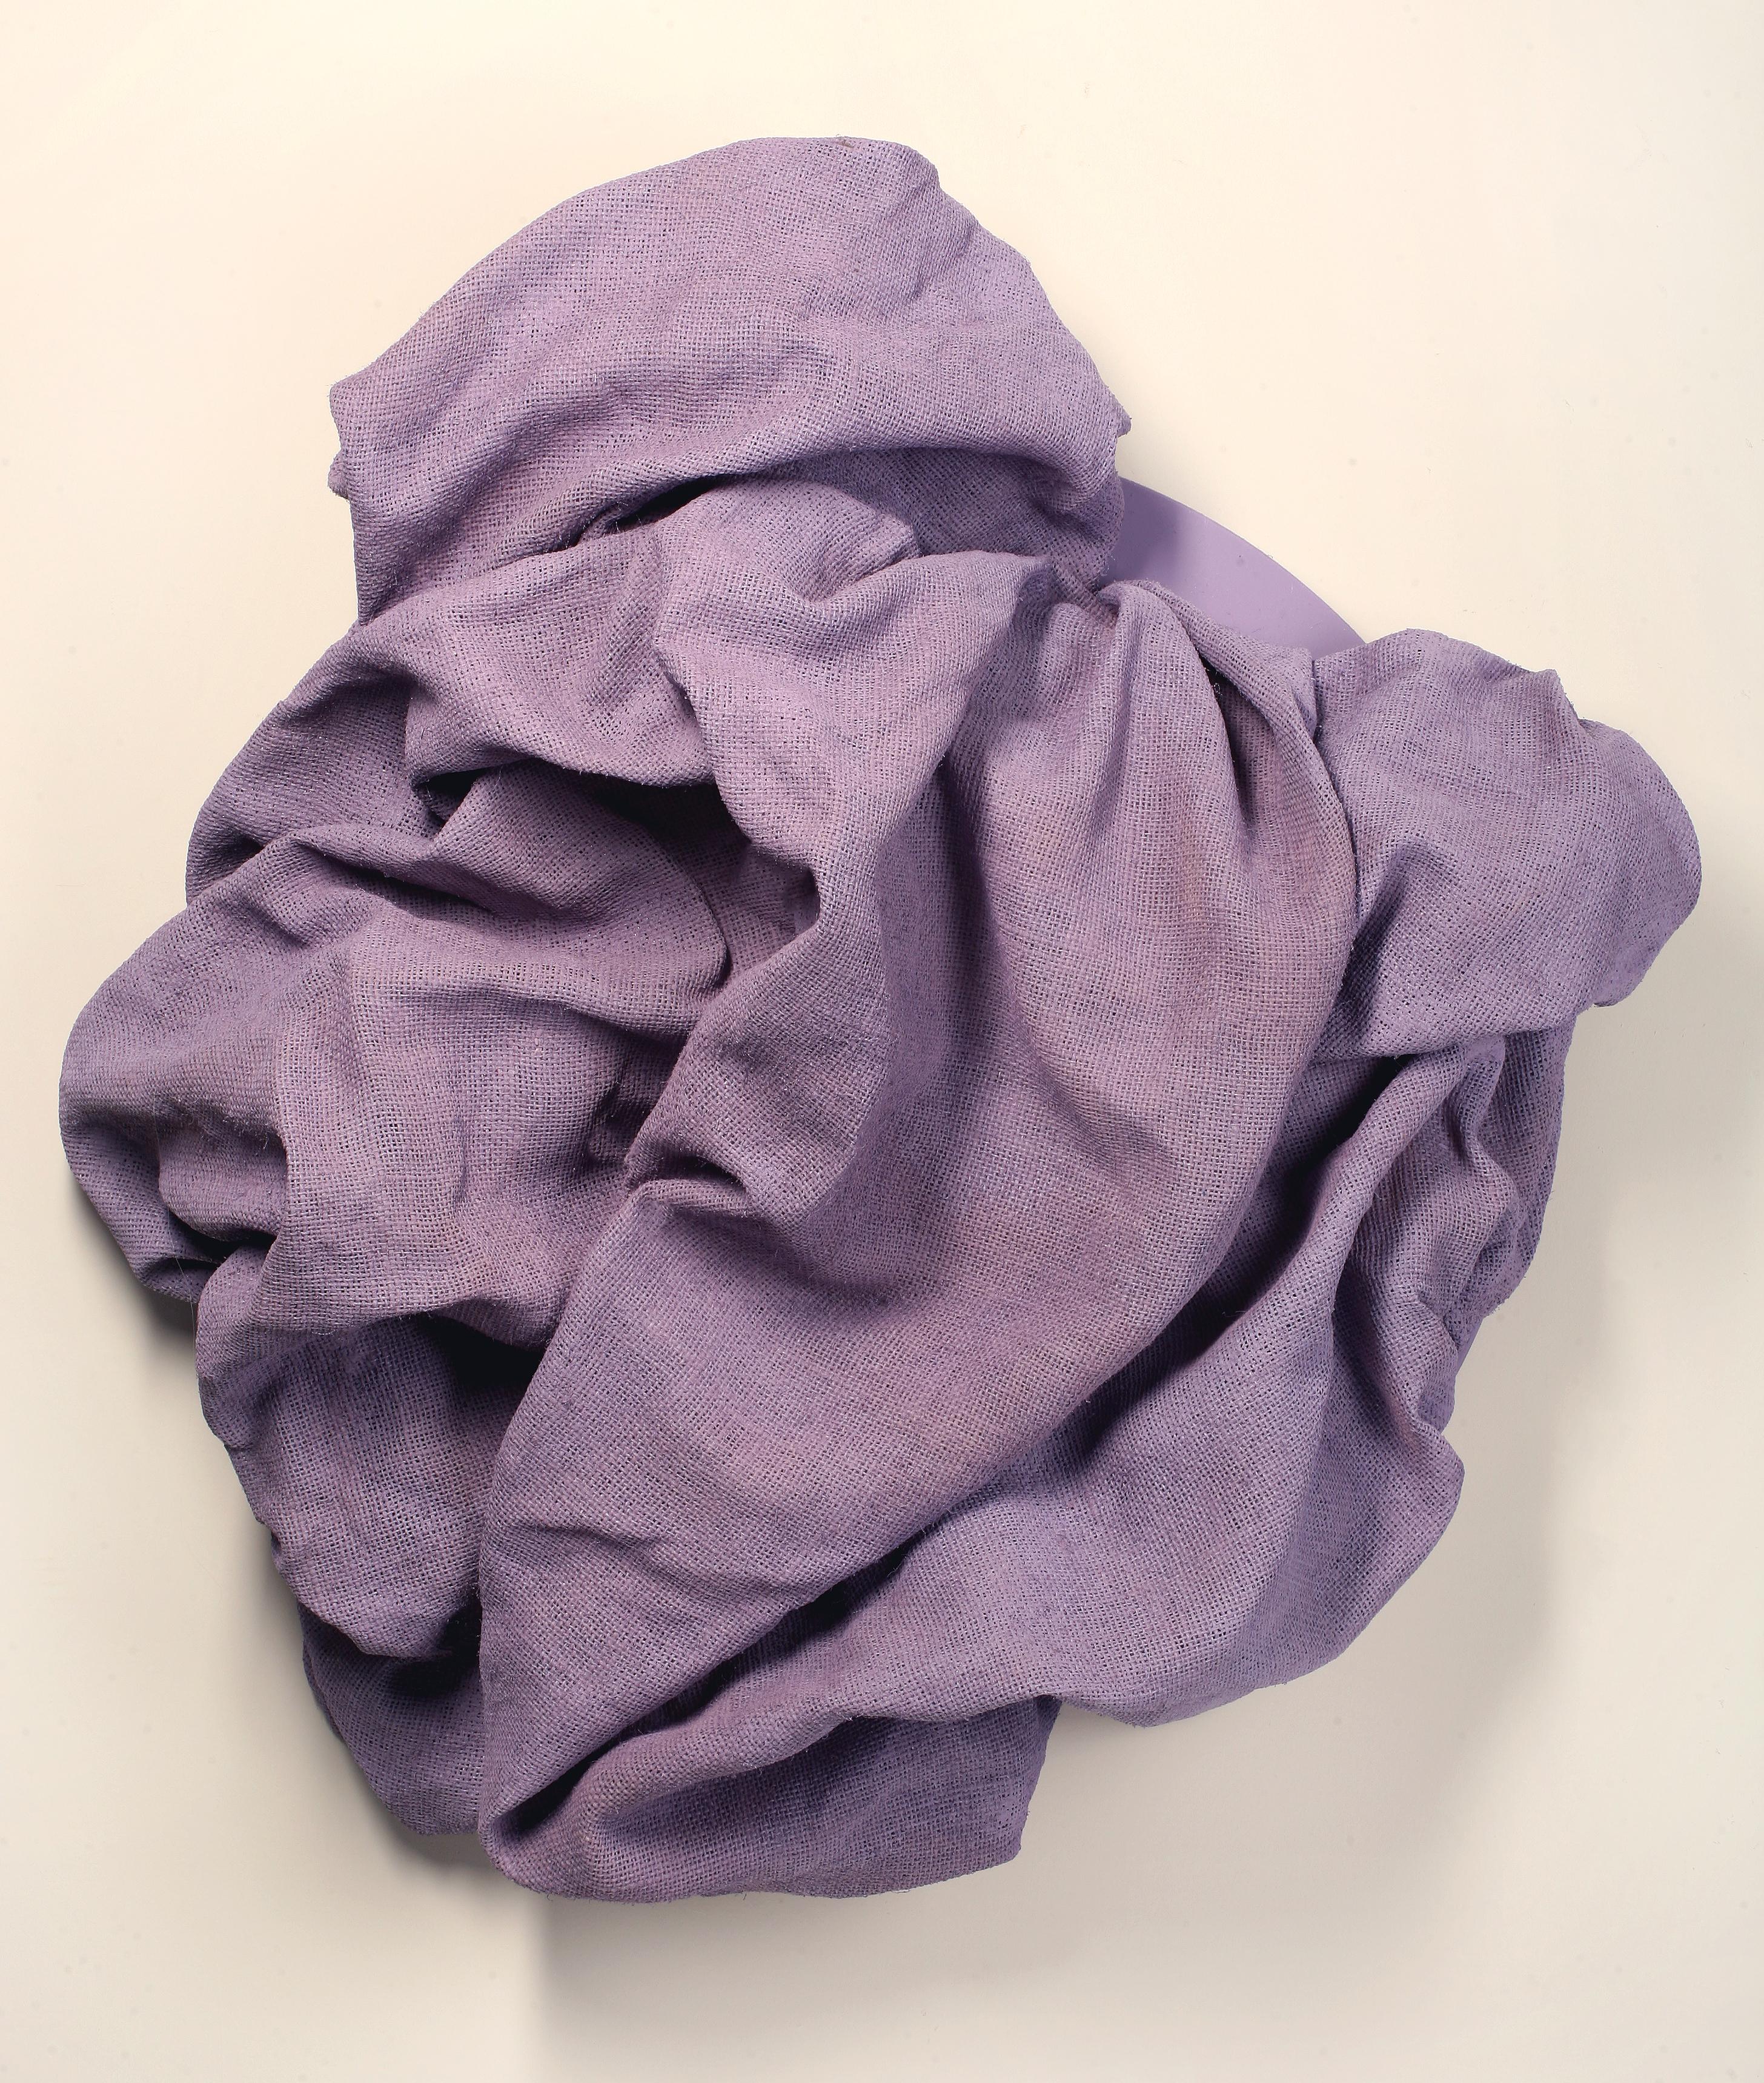 Lavender Folds 2 (fabric art, wall sculpture, contemporary design, textile art)